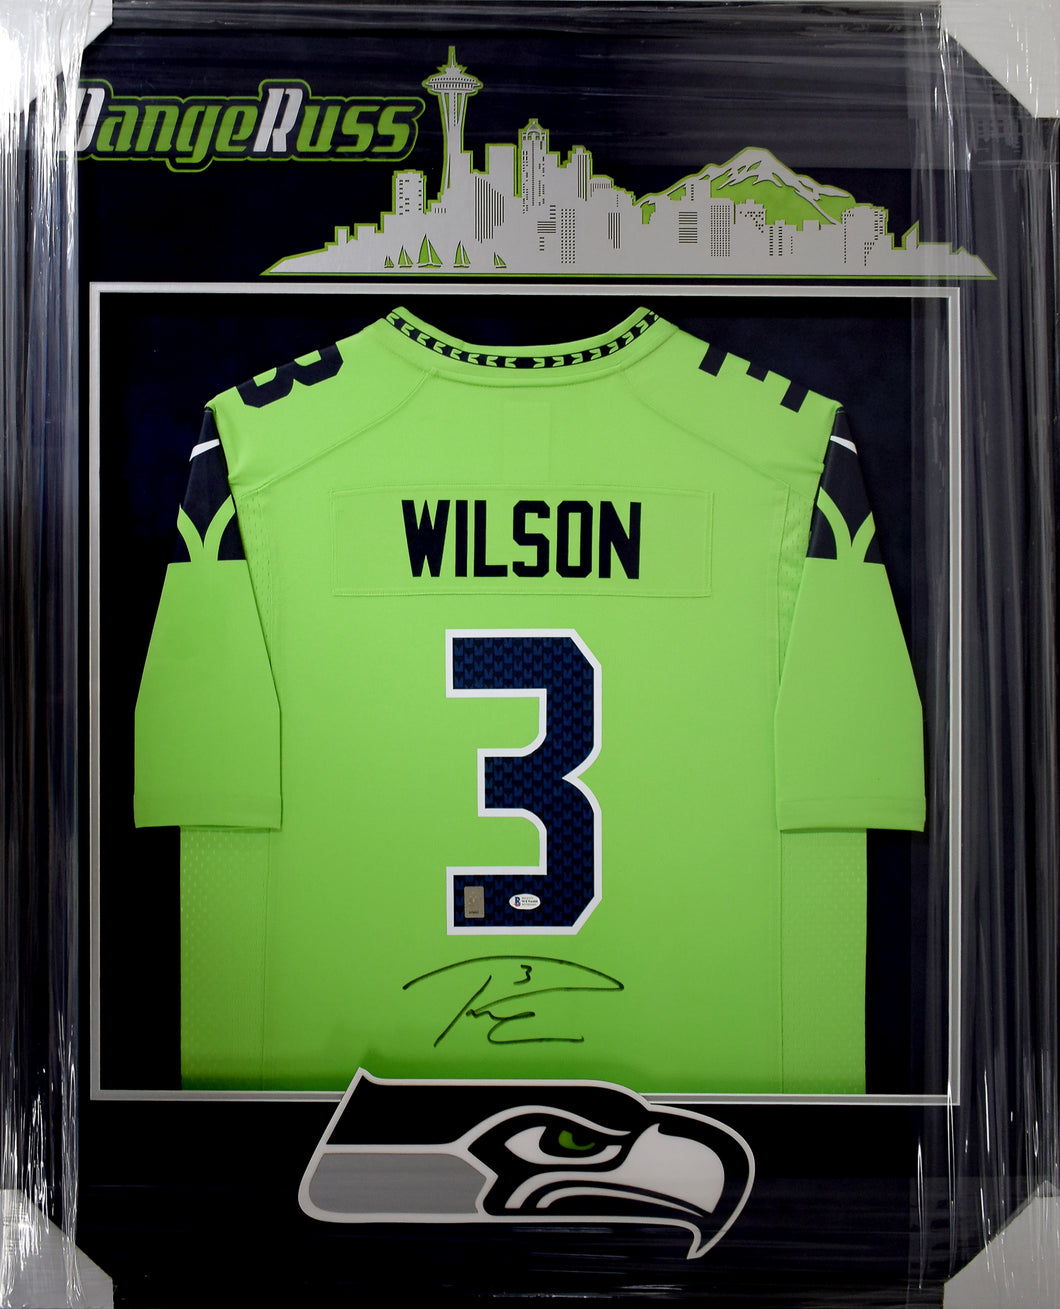 Russell Wilson Skyline Jersey, Signed